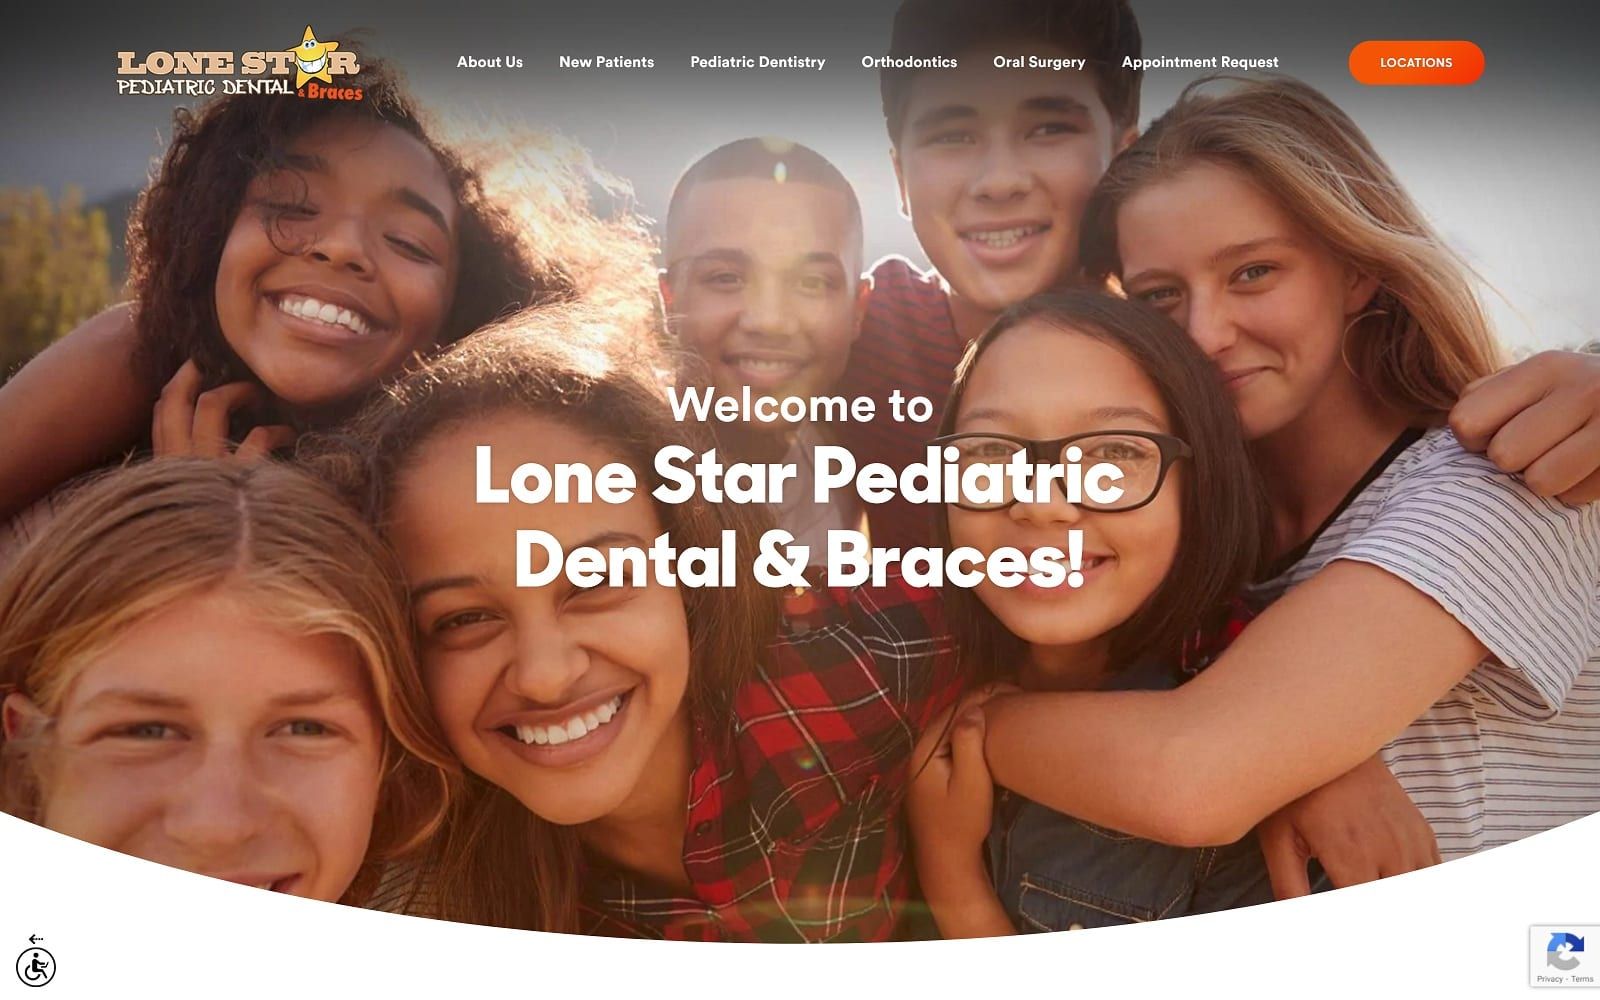 The screenshot of lone star pediatric dental & braces website